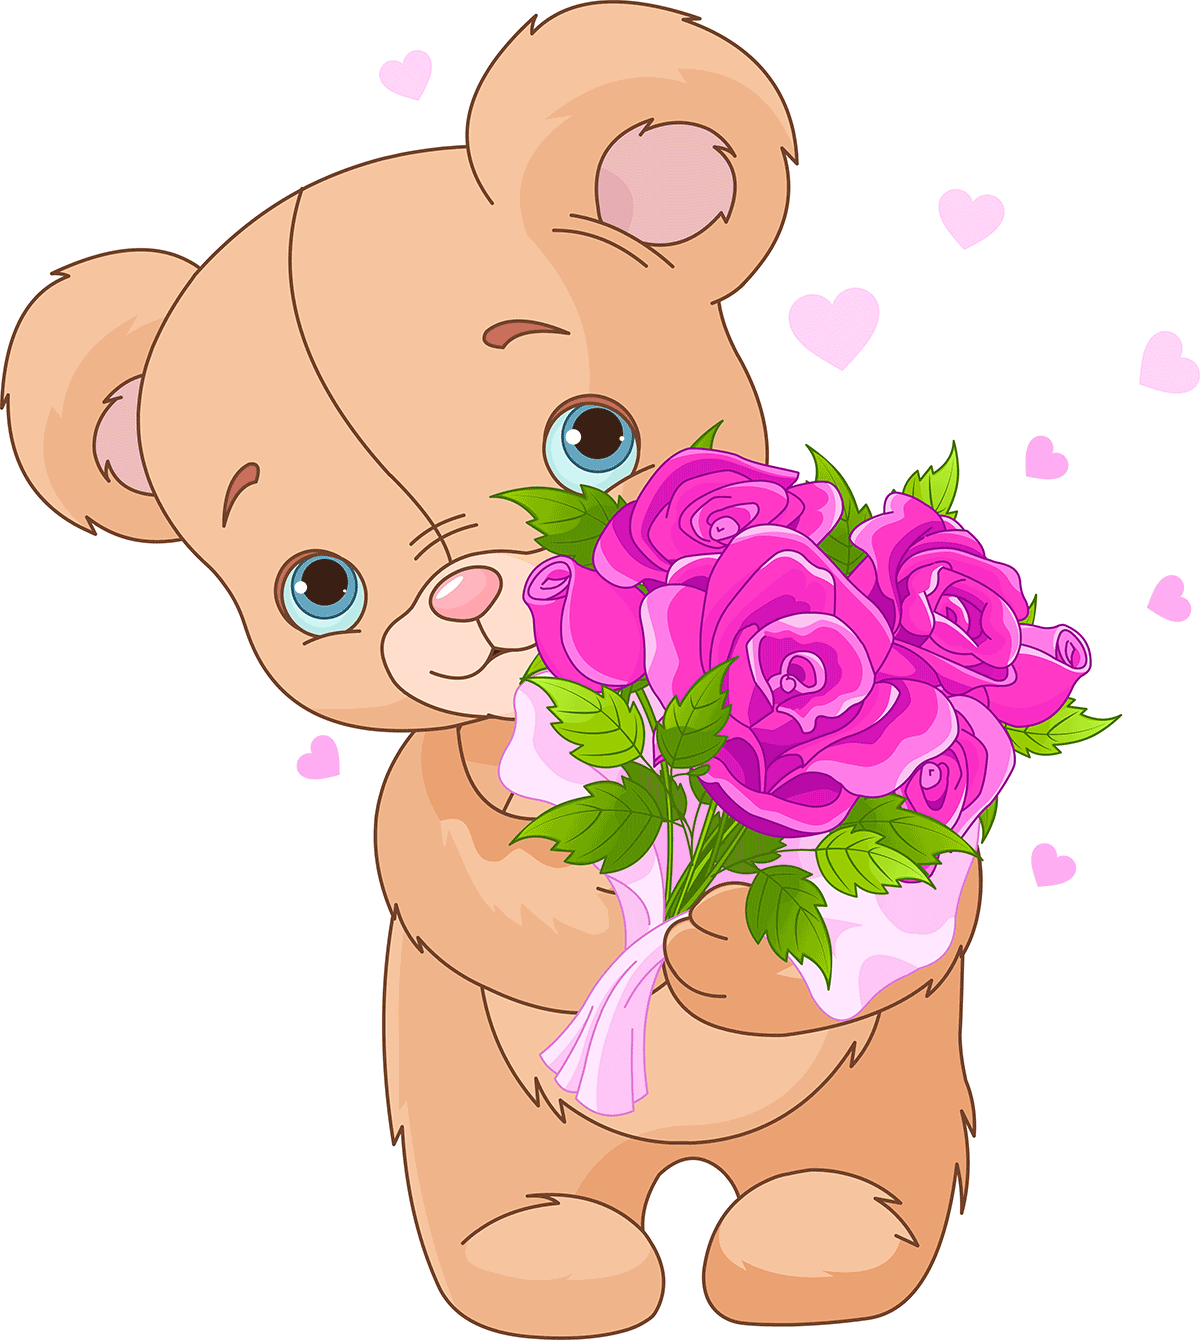 Teddy bear hodling a bouquet of flowers.